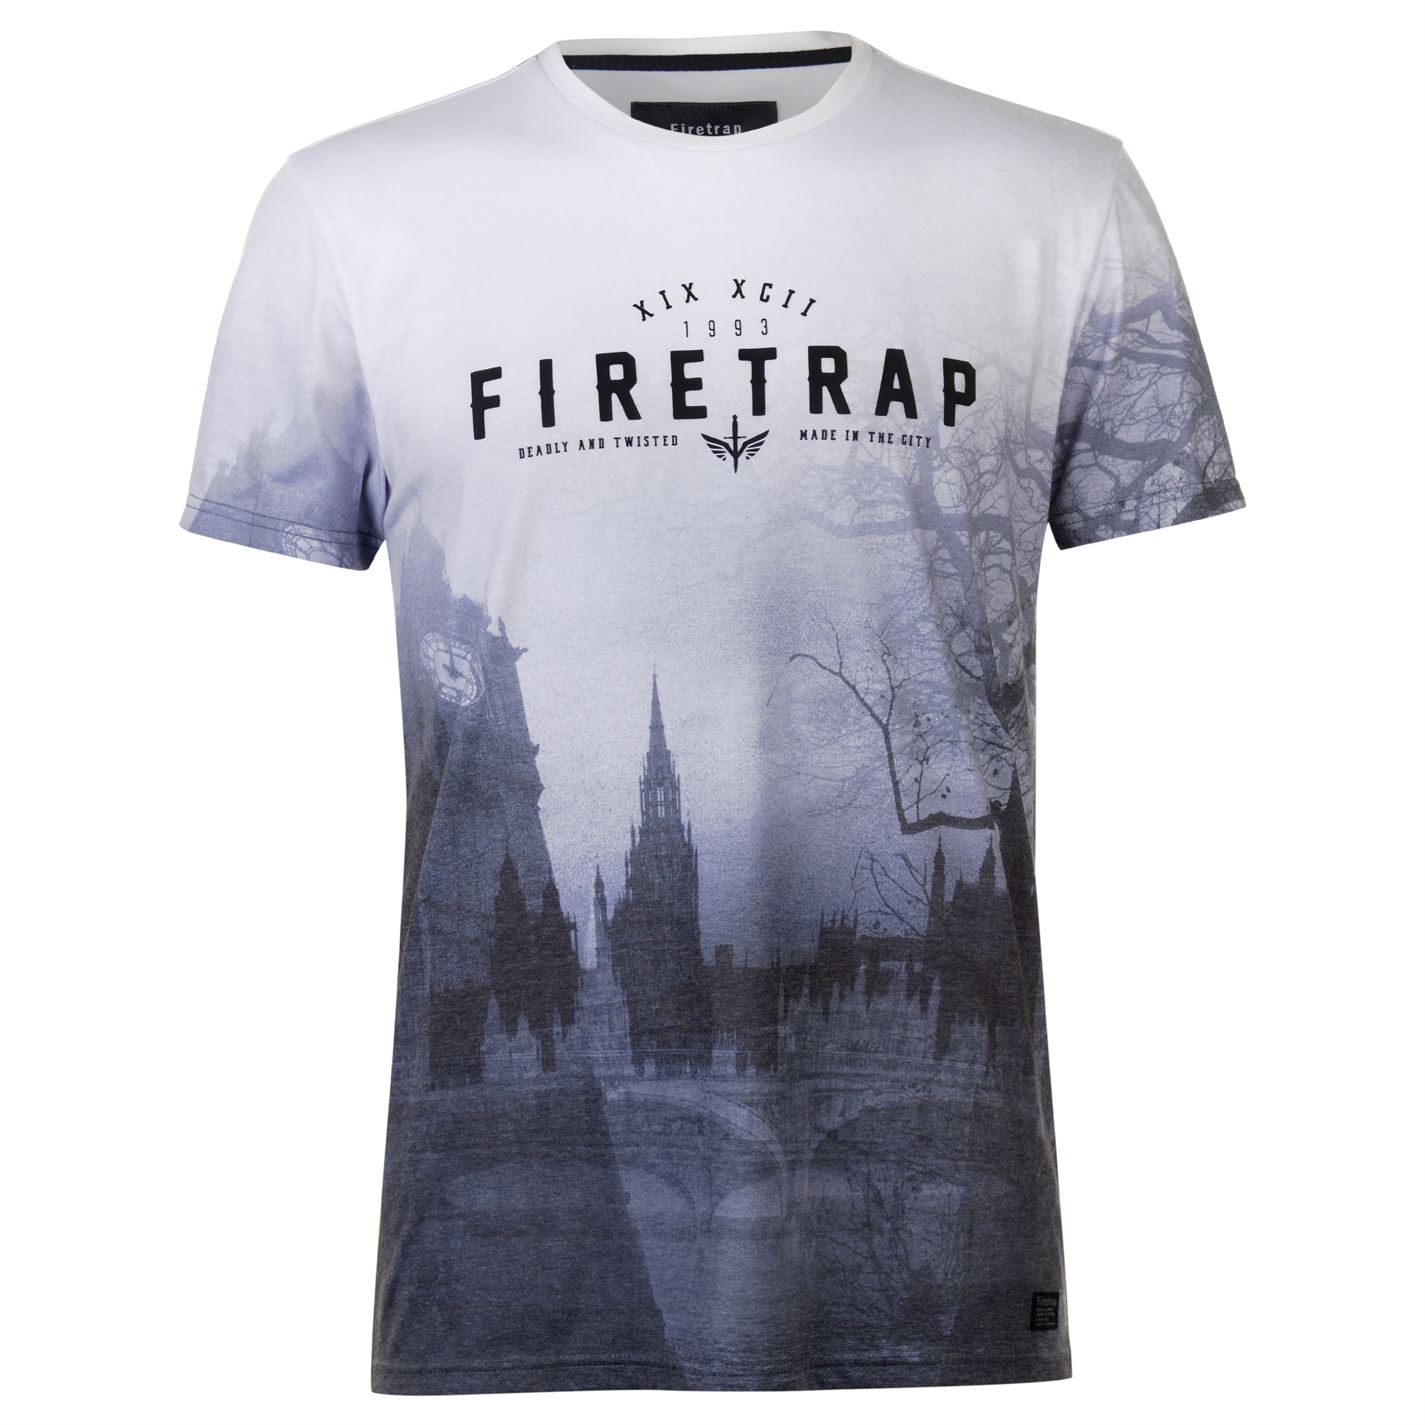 Firetrap Sub The City T Shirt Mens